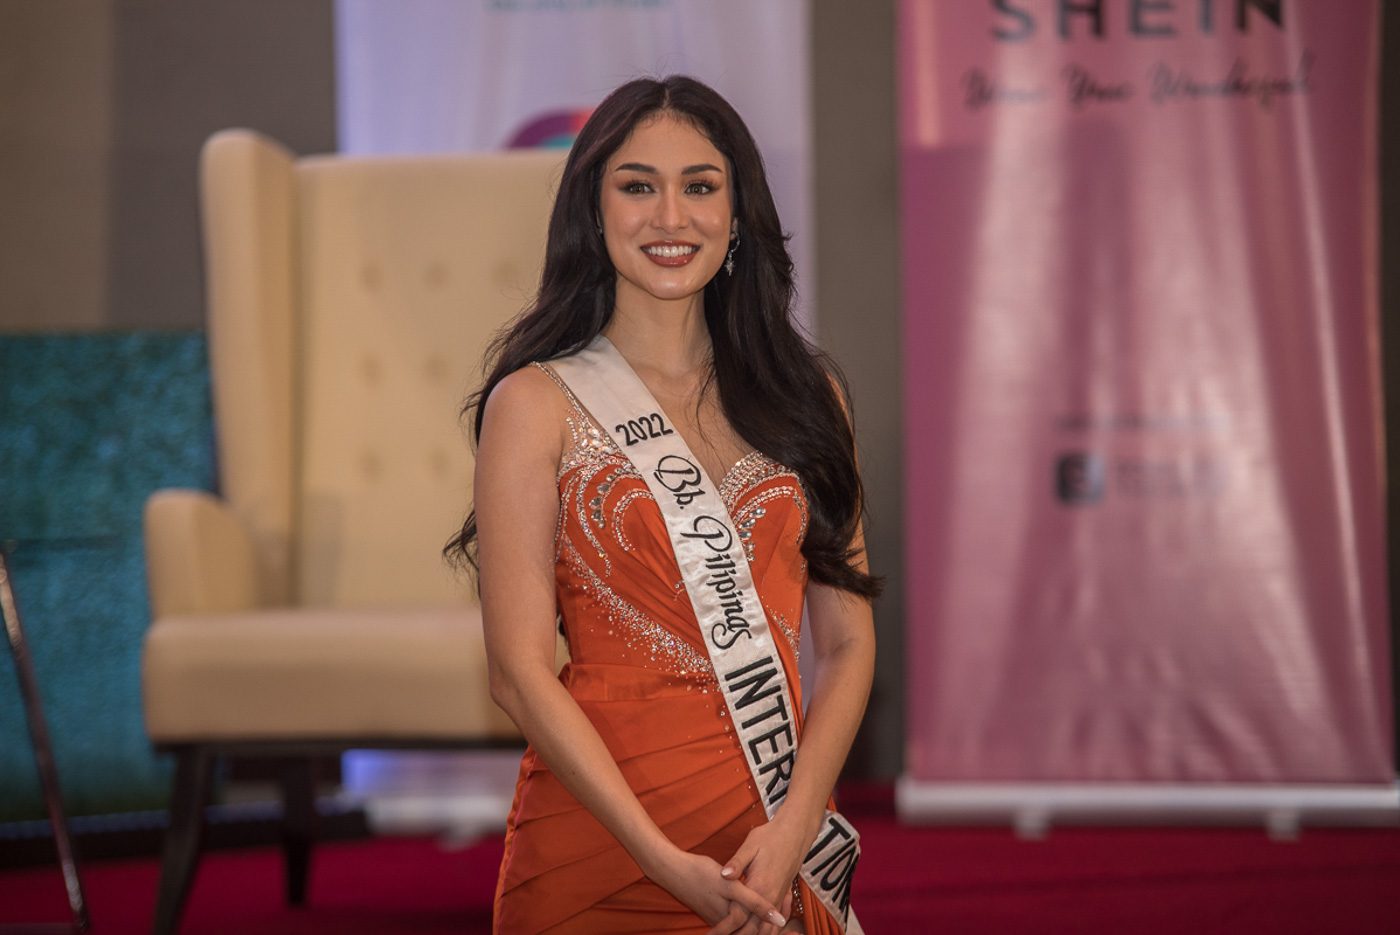 Miss International 2023 coronation night set in Japan in October